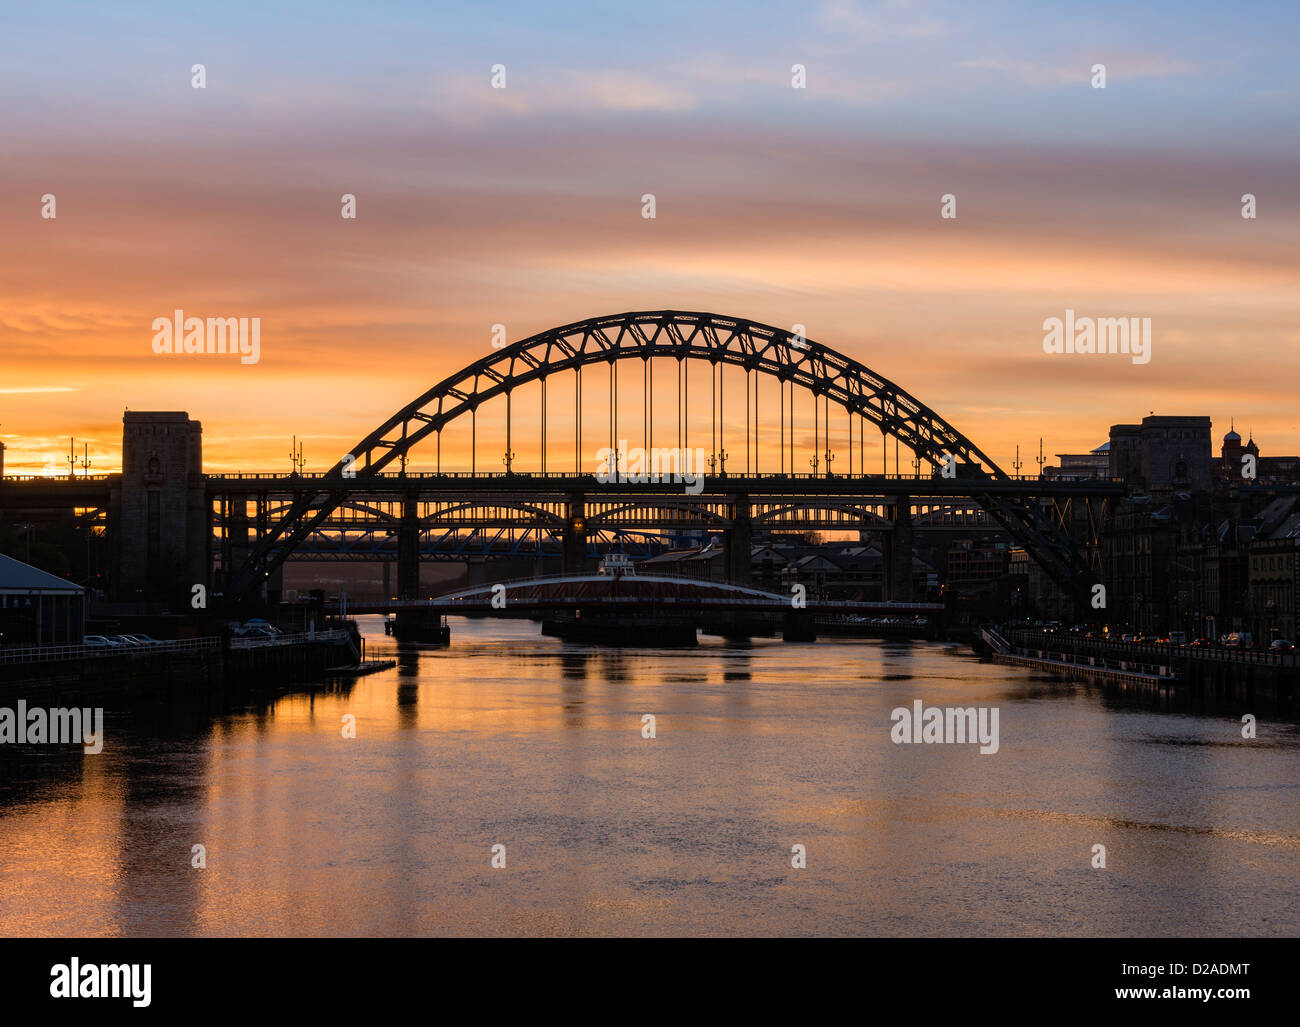 The river Tyne and the Tyne Bridge at Dusk. Stock Photo